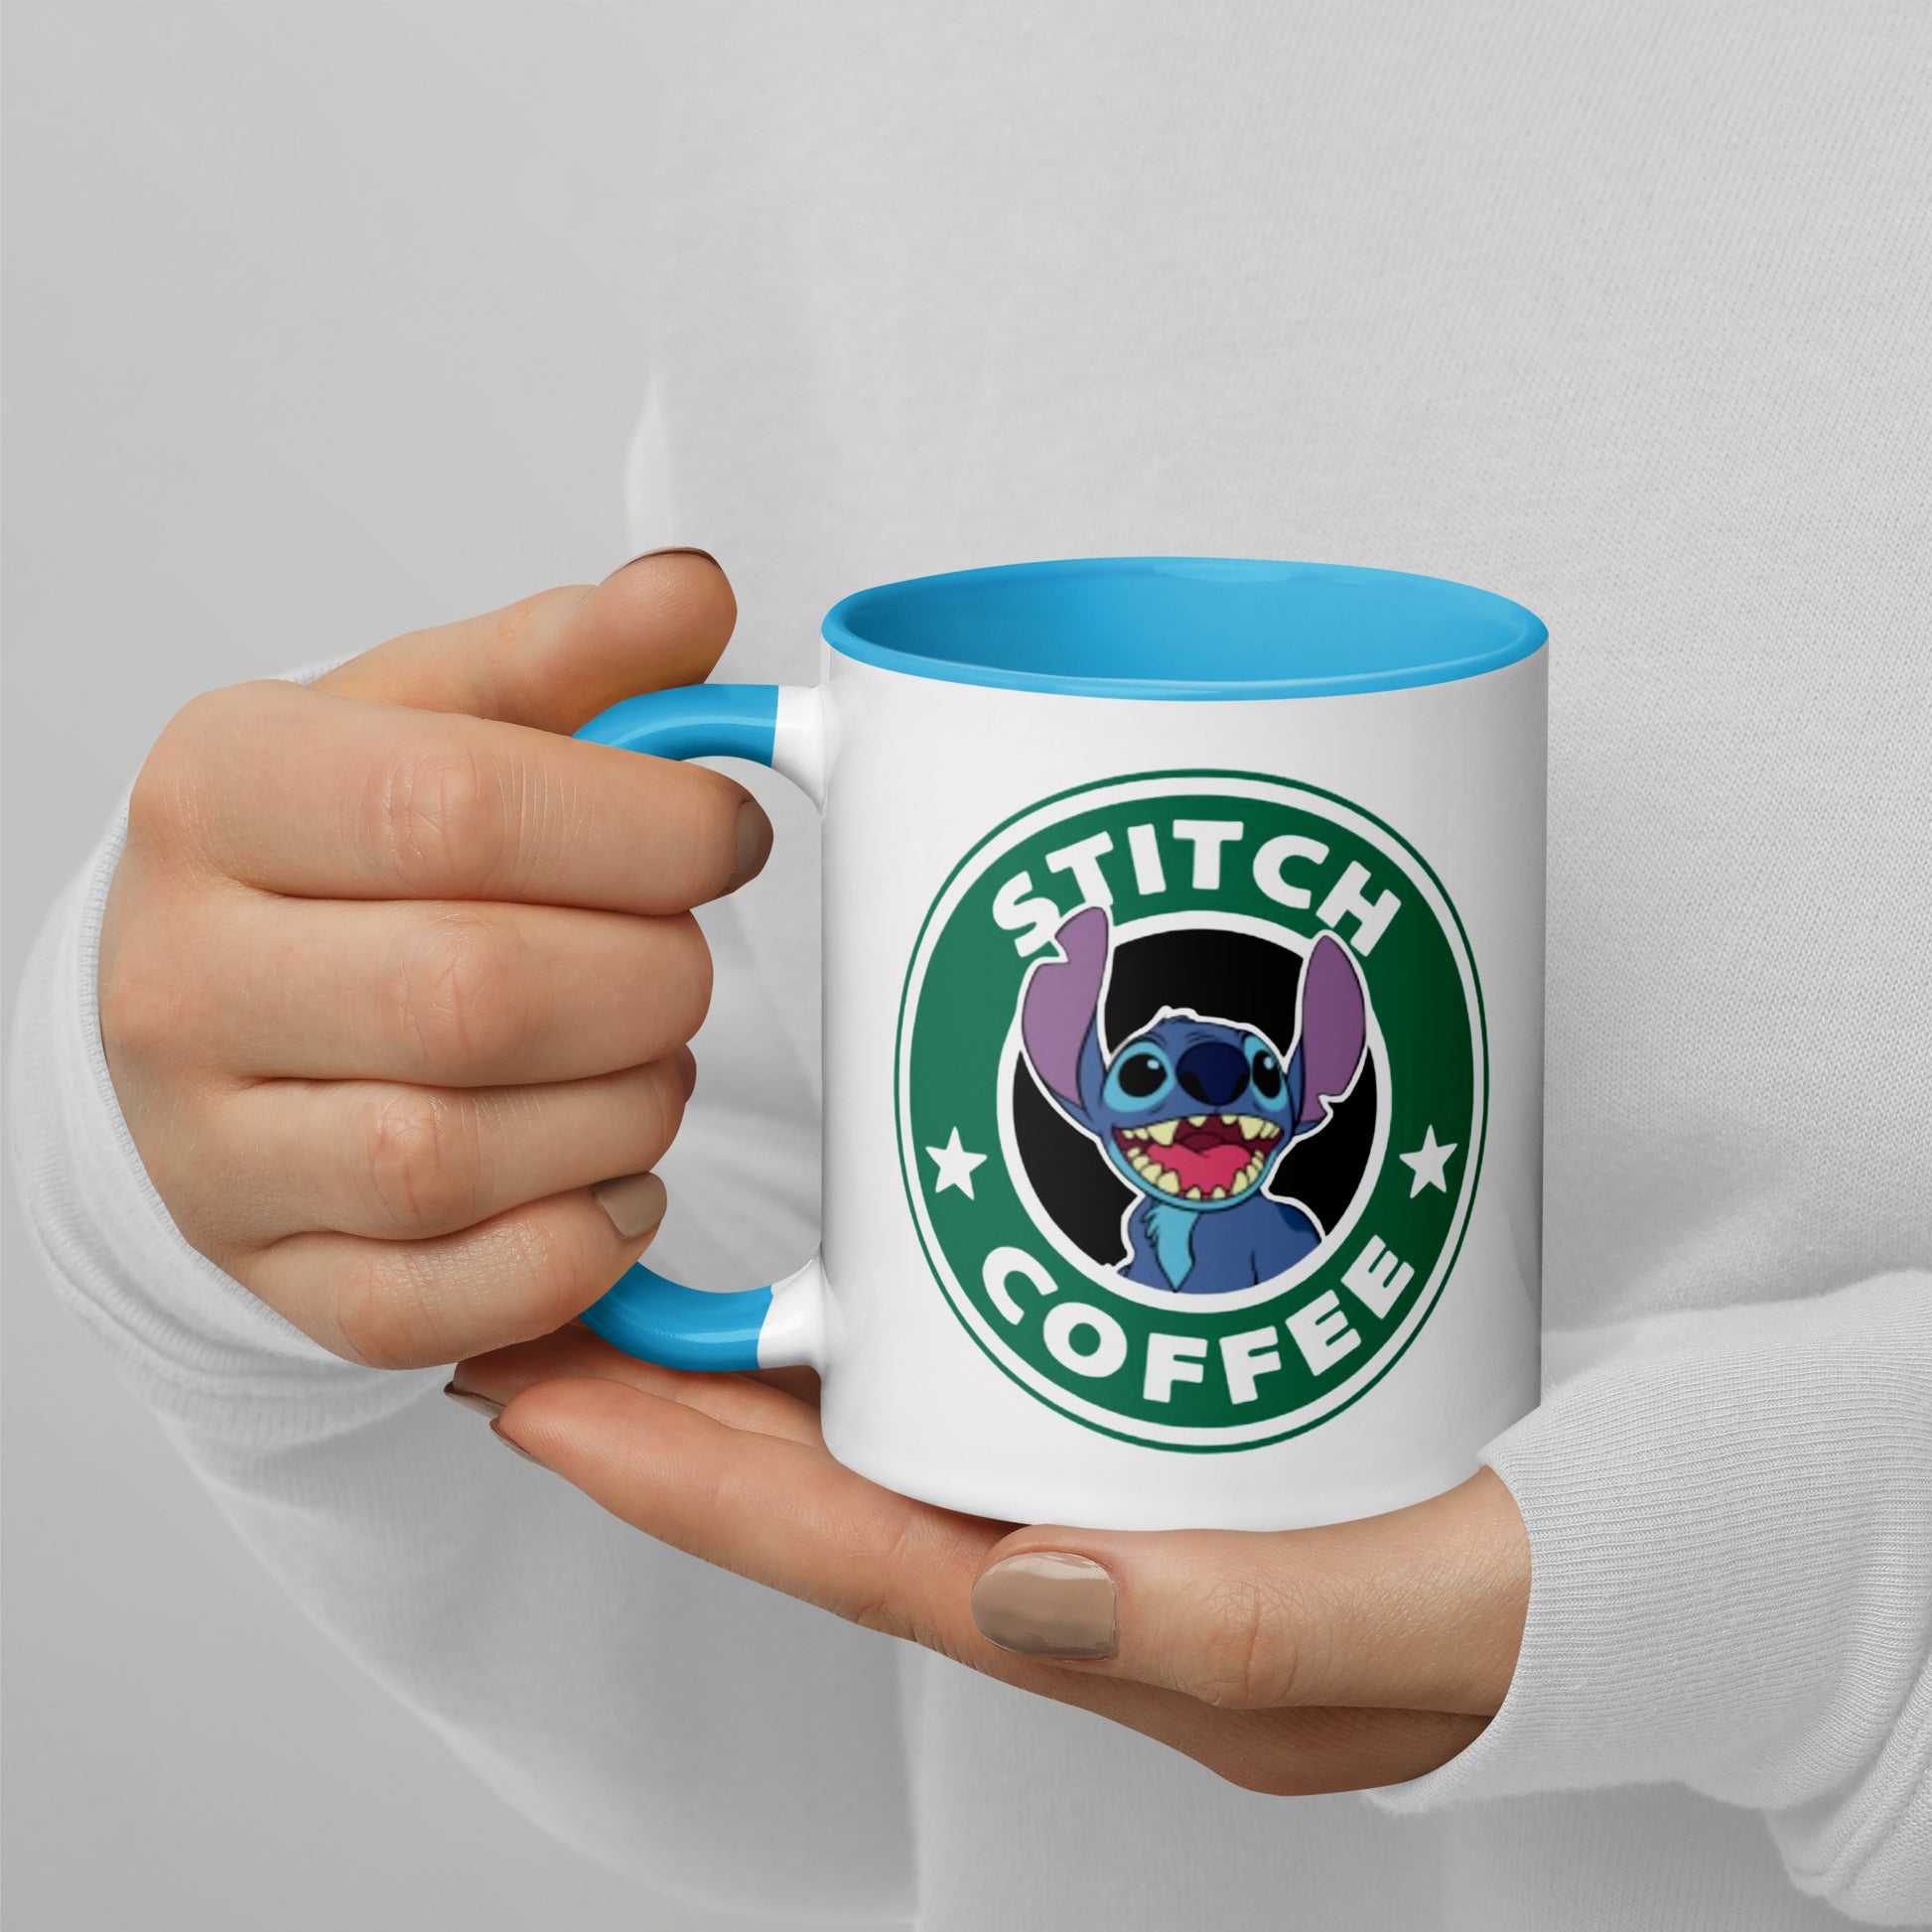 Mug with Color Inside stitch coffee DrinkandArt